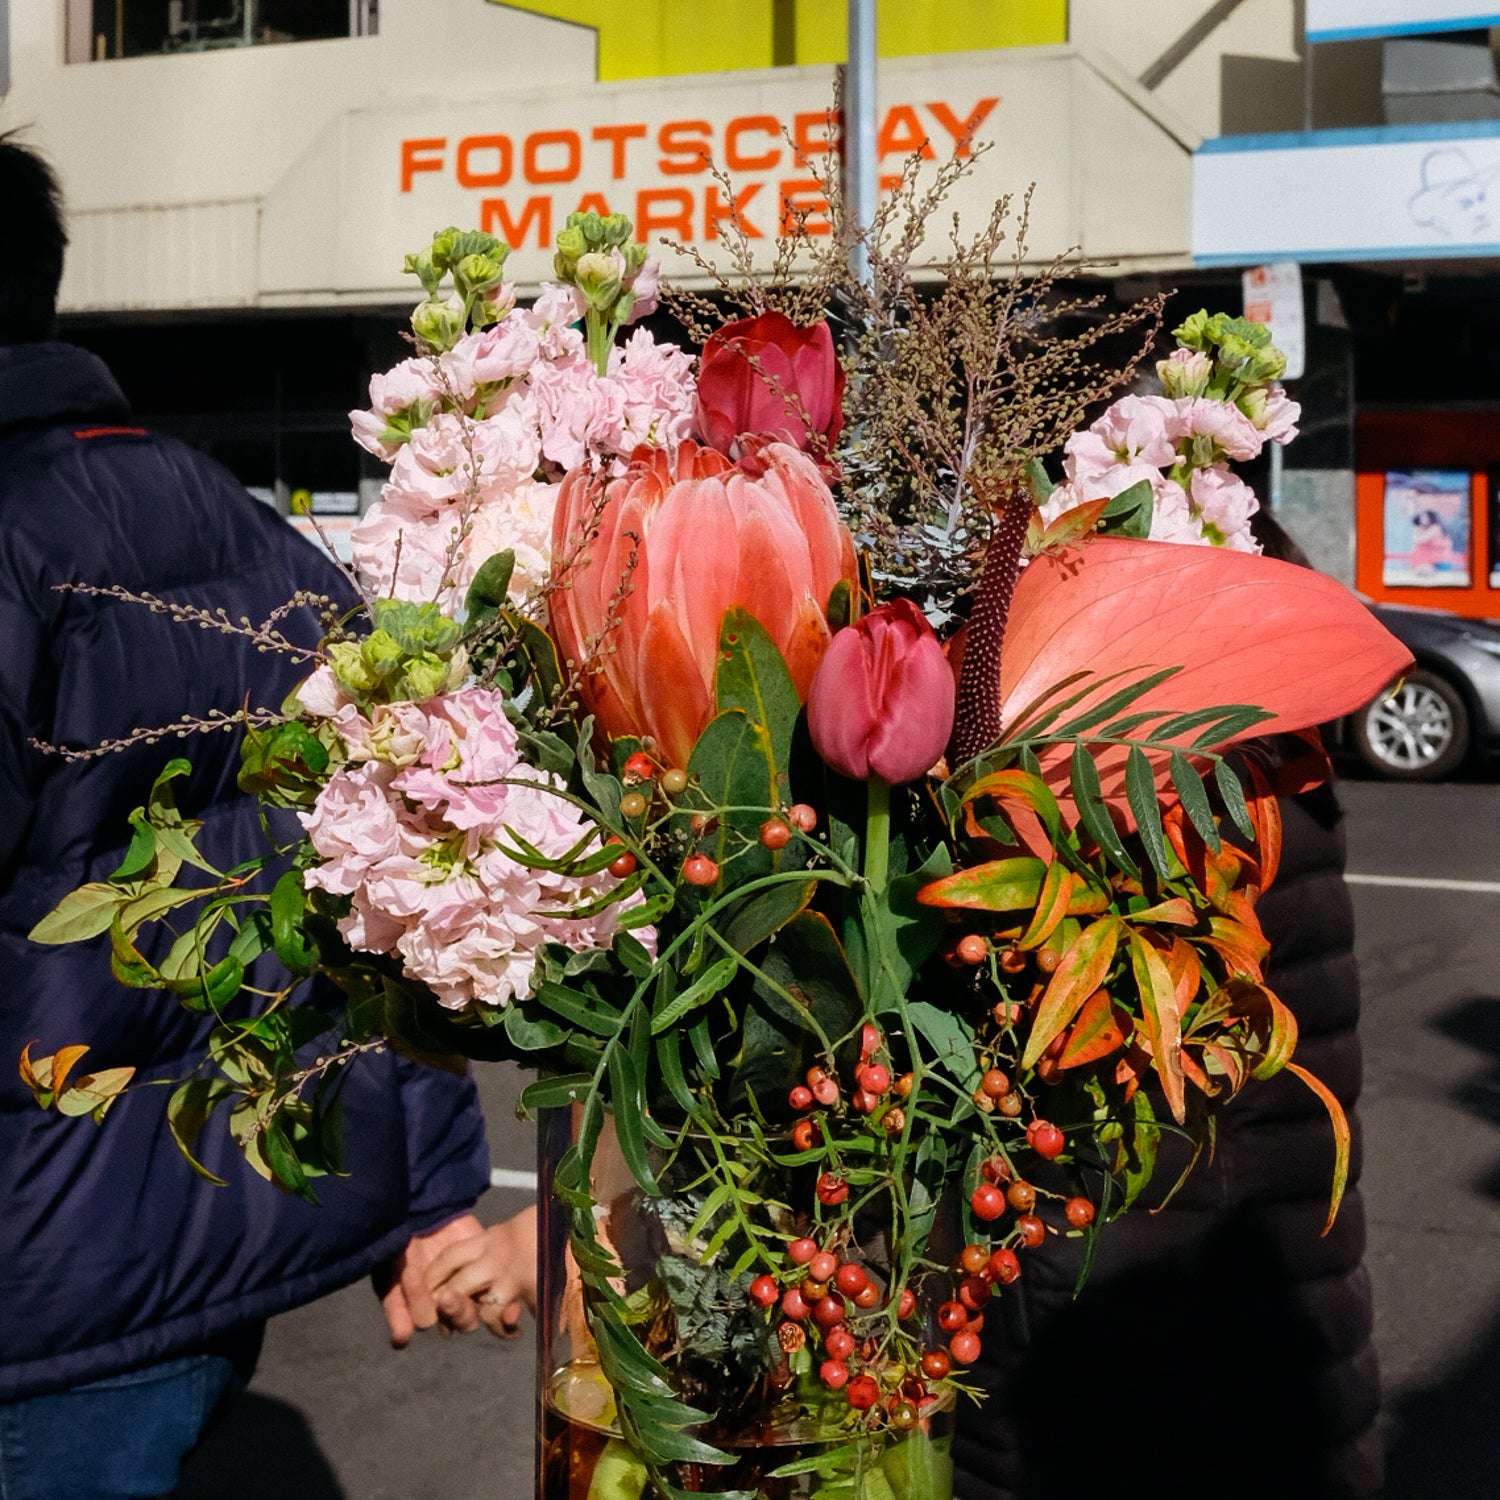 The Footscray Market bunch